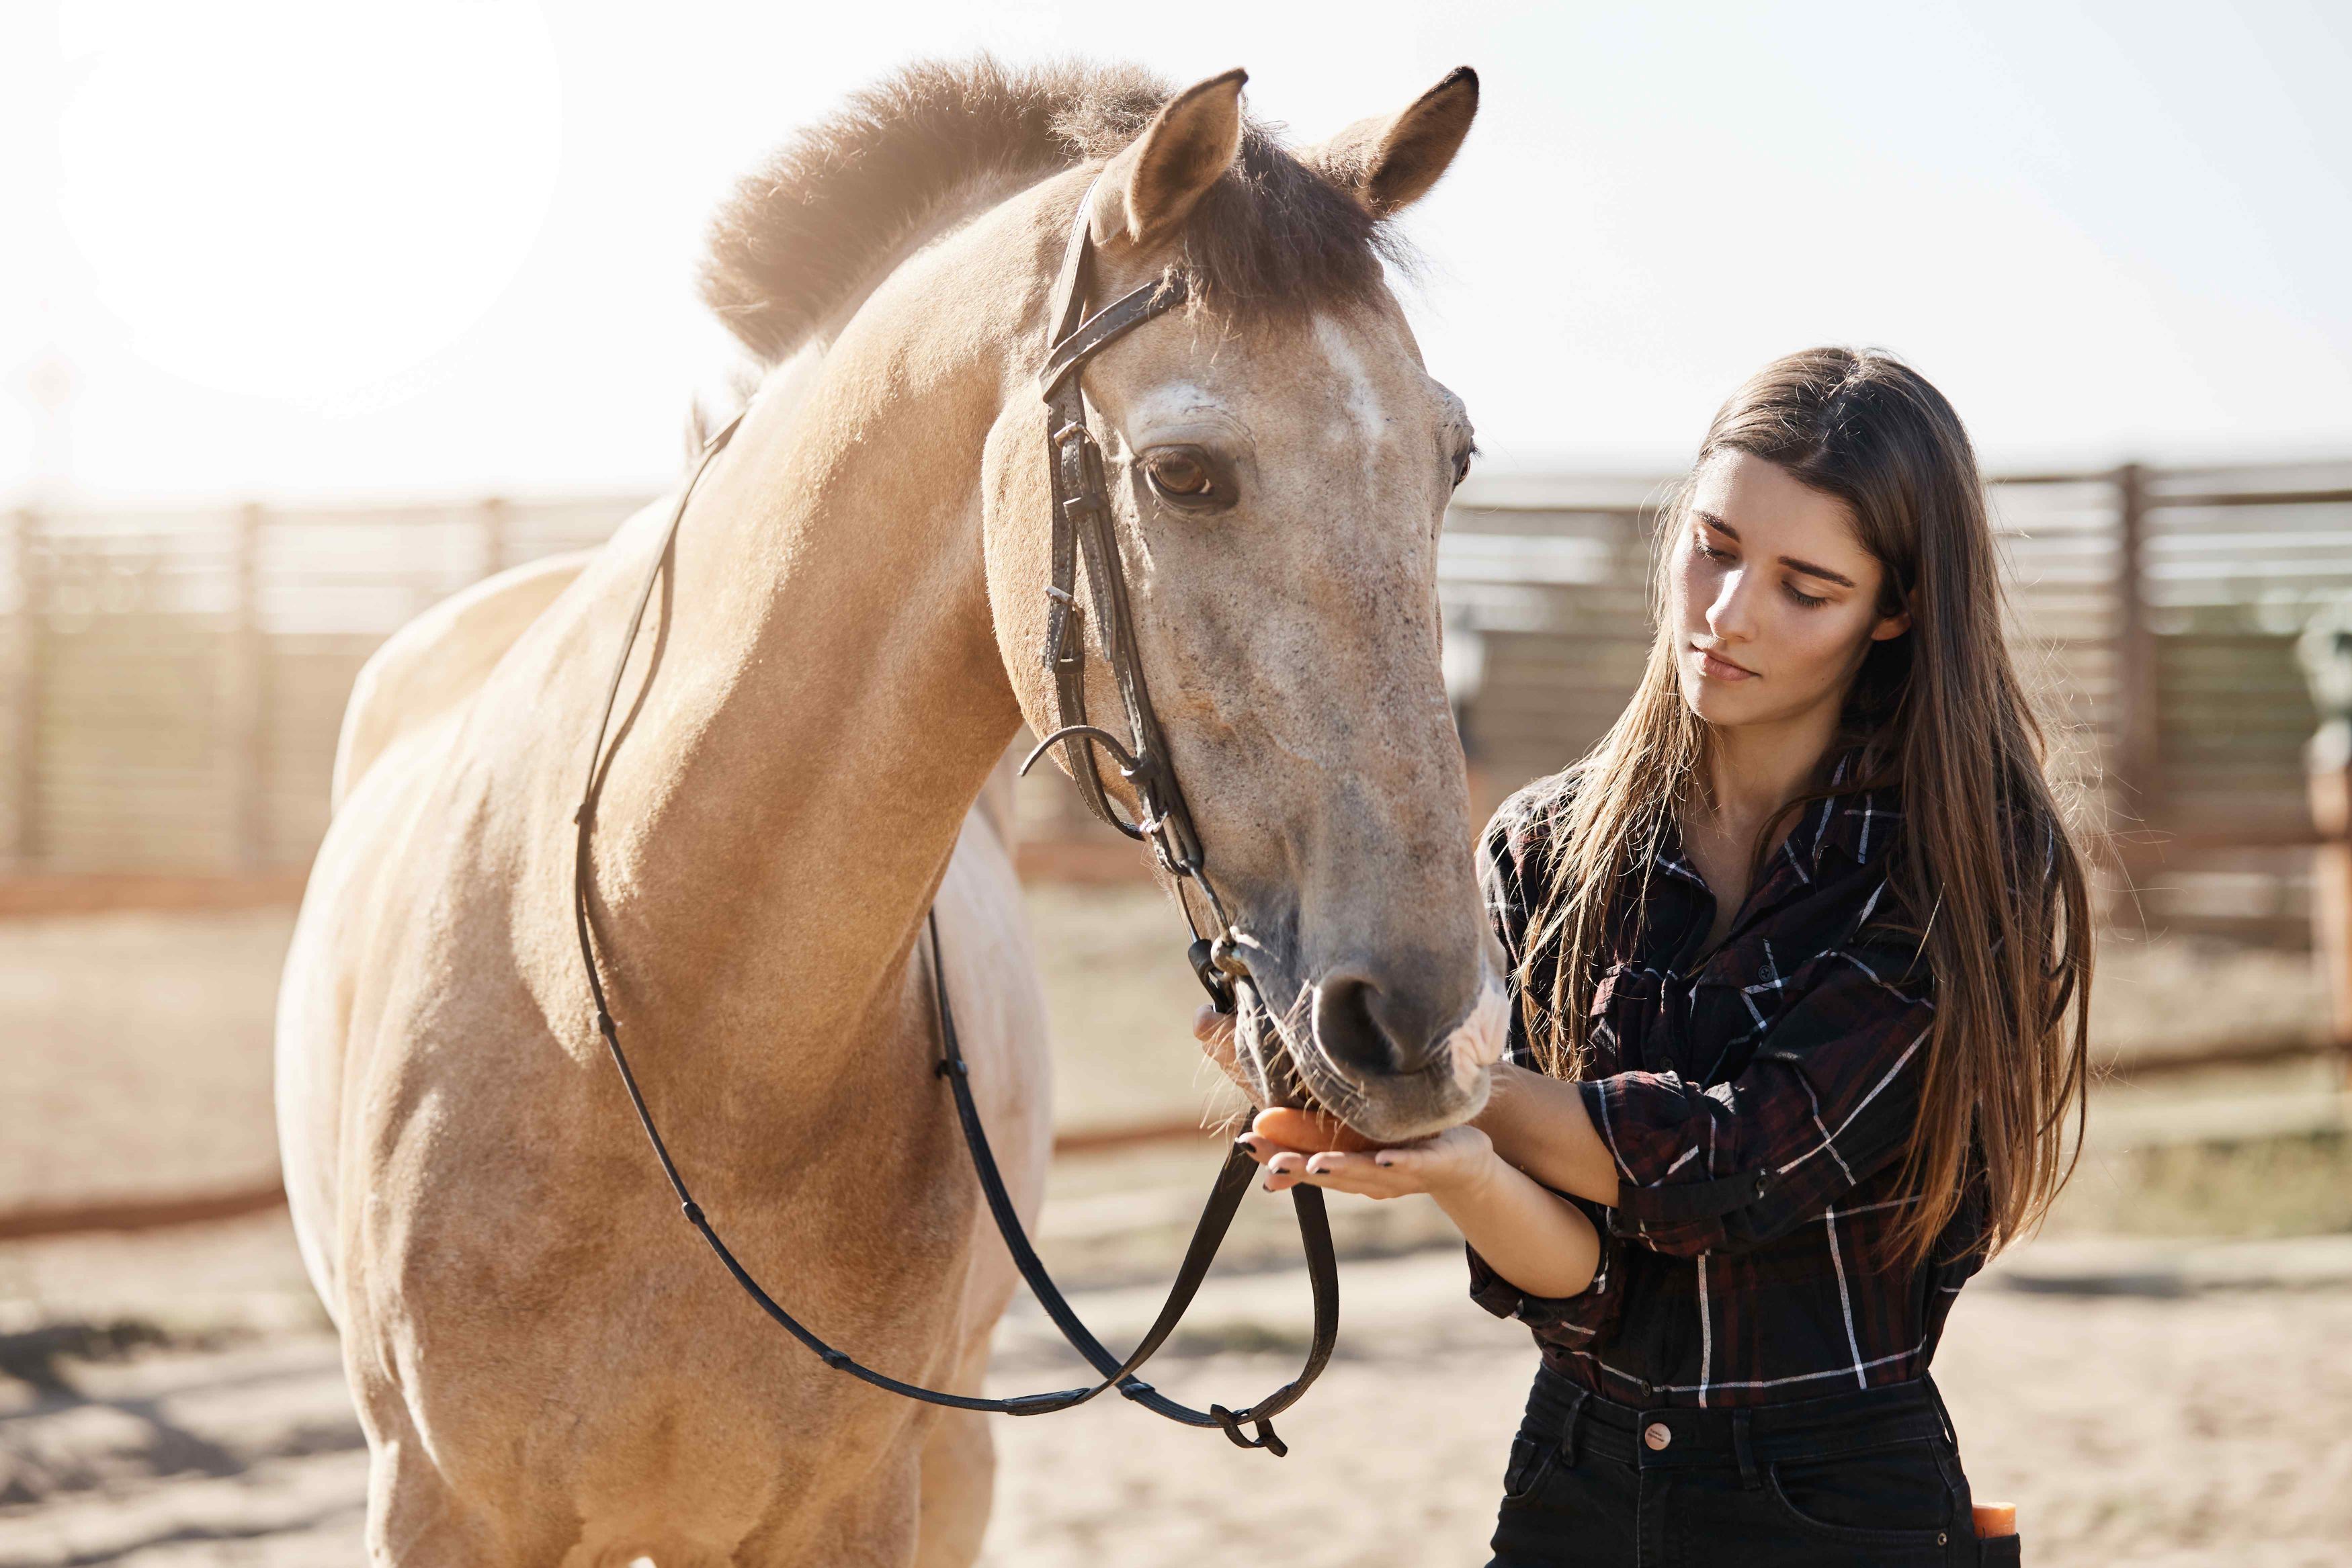 557-young-beautiful-female-farrier-feeding-horse-preparing-trim-shape-hooves.jpg